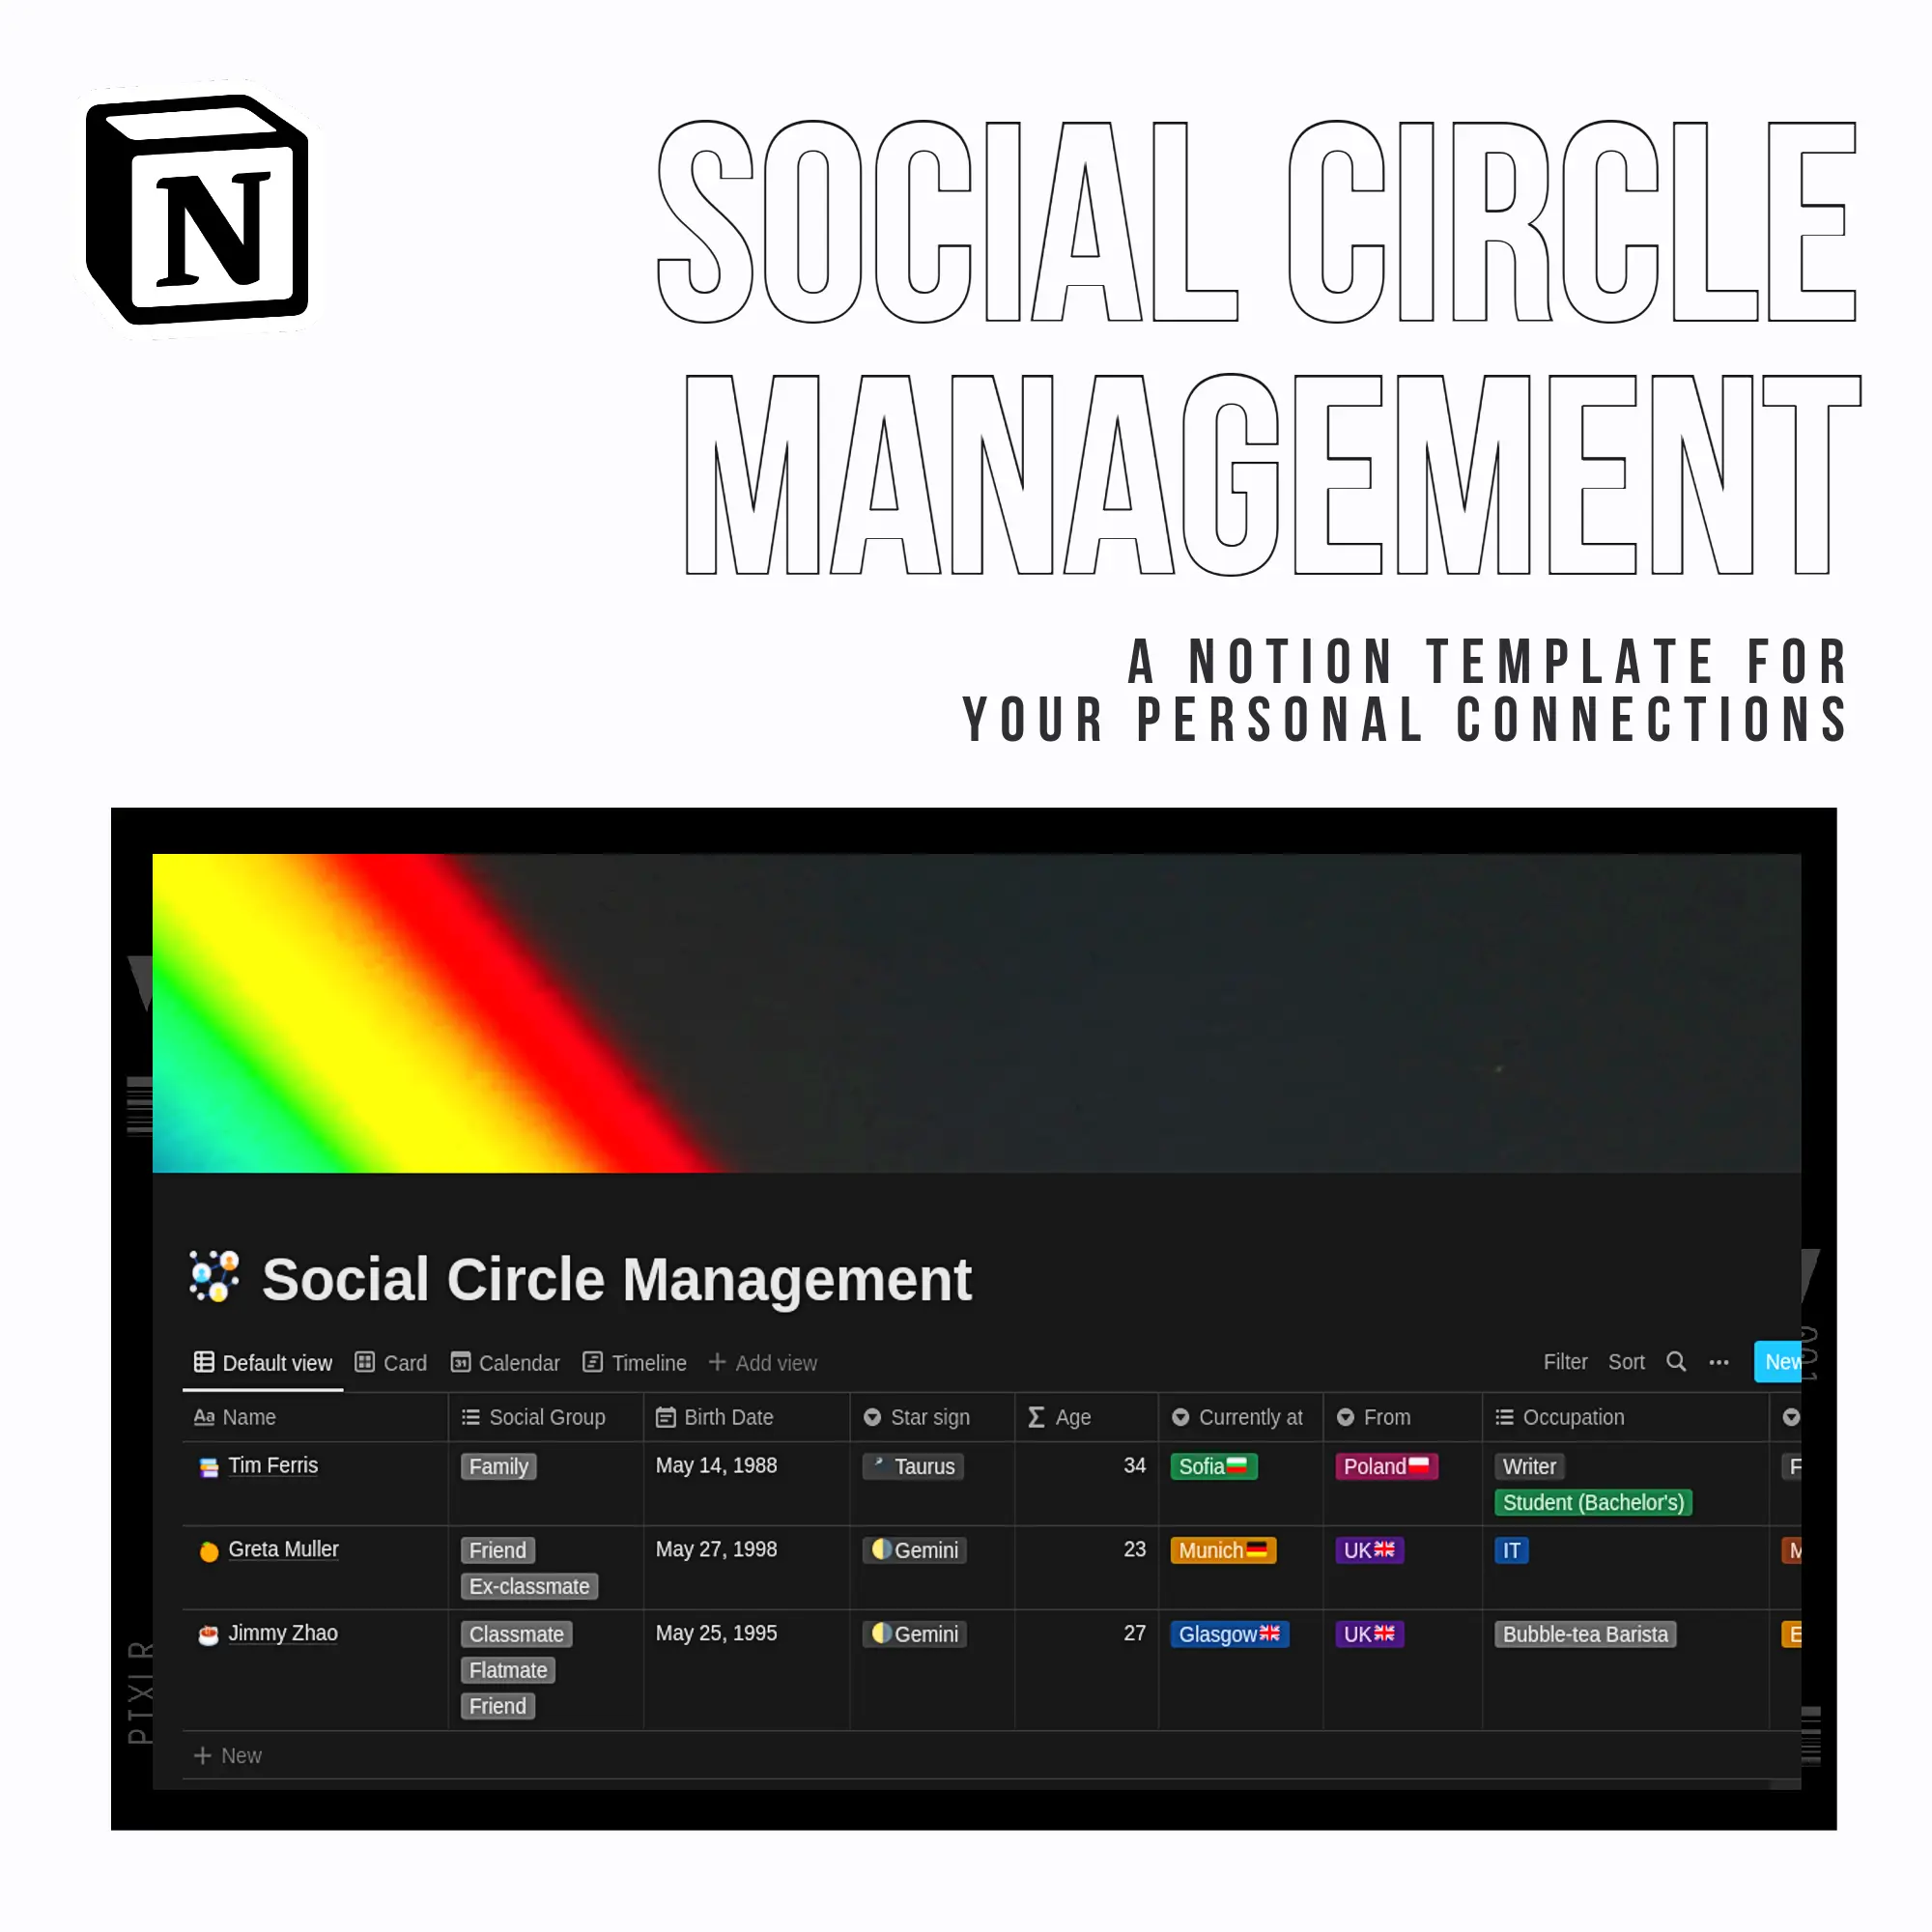 Social_Circle_Management_Notion_Template